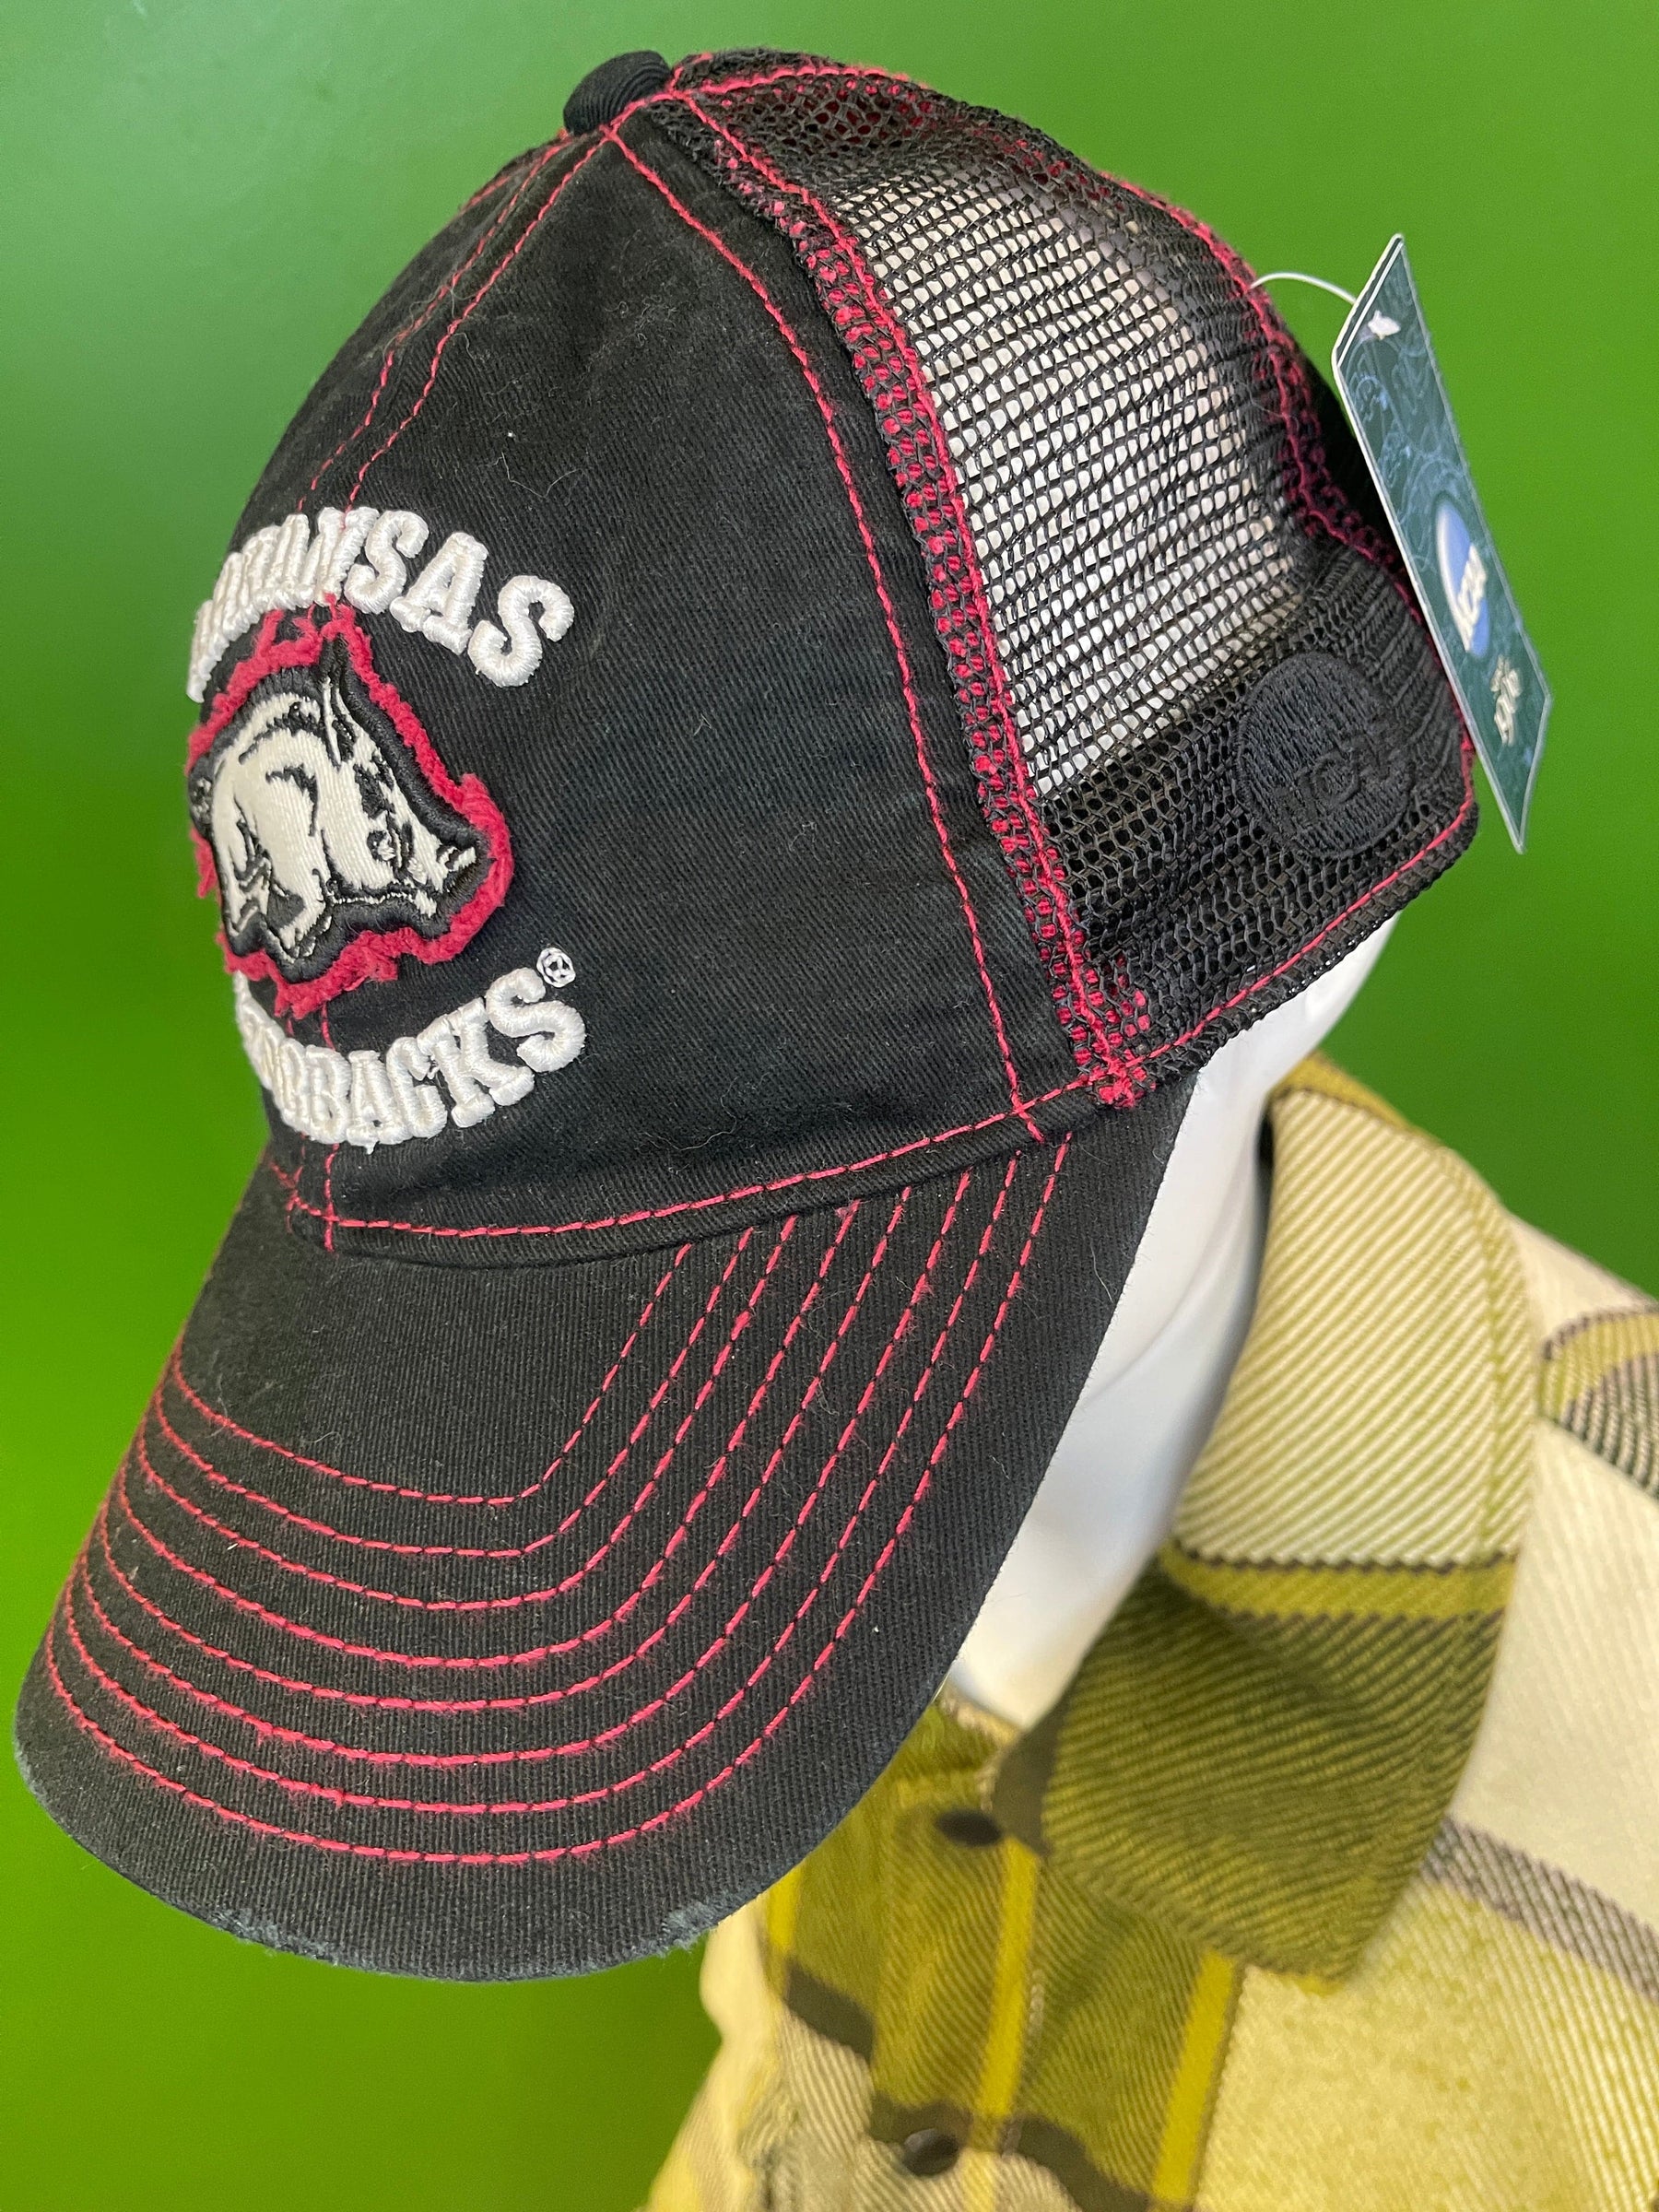 NCAA Arkansas Razorbacks Distressed Mesh Snapback Hat/Cap OSFM NWT